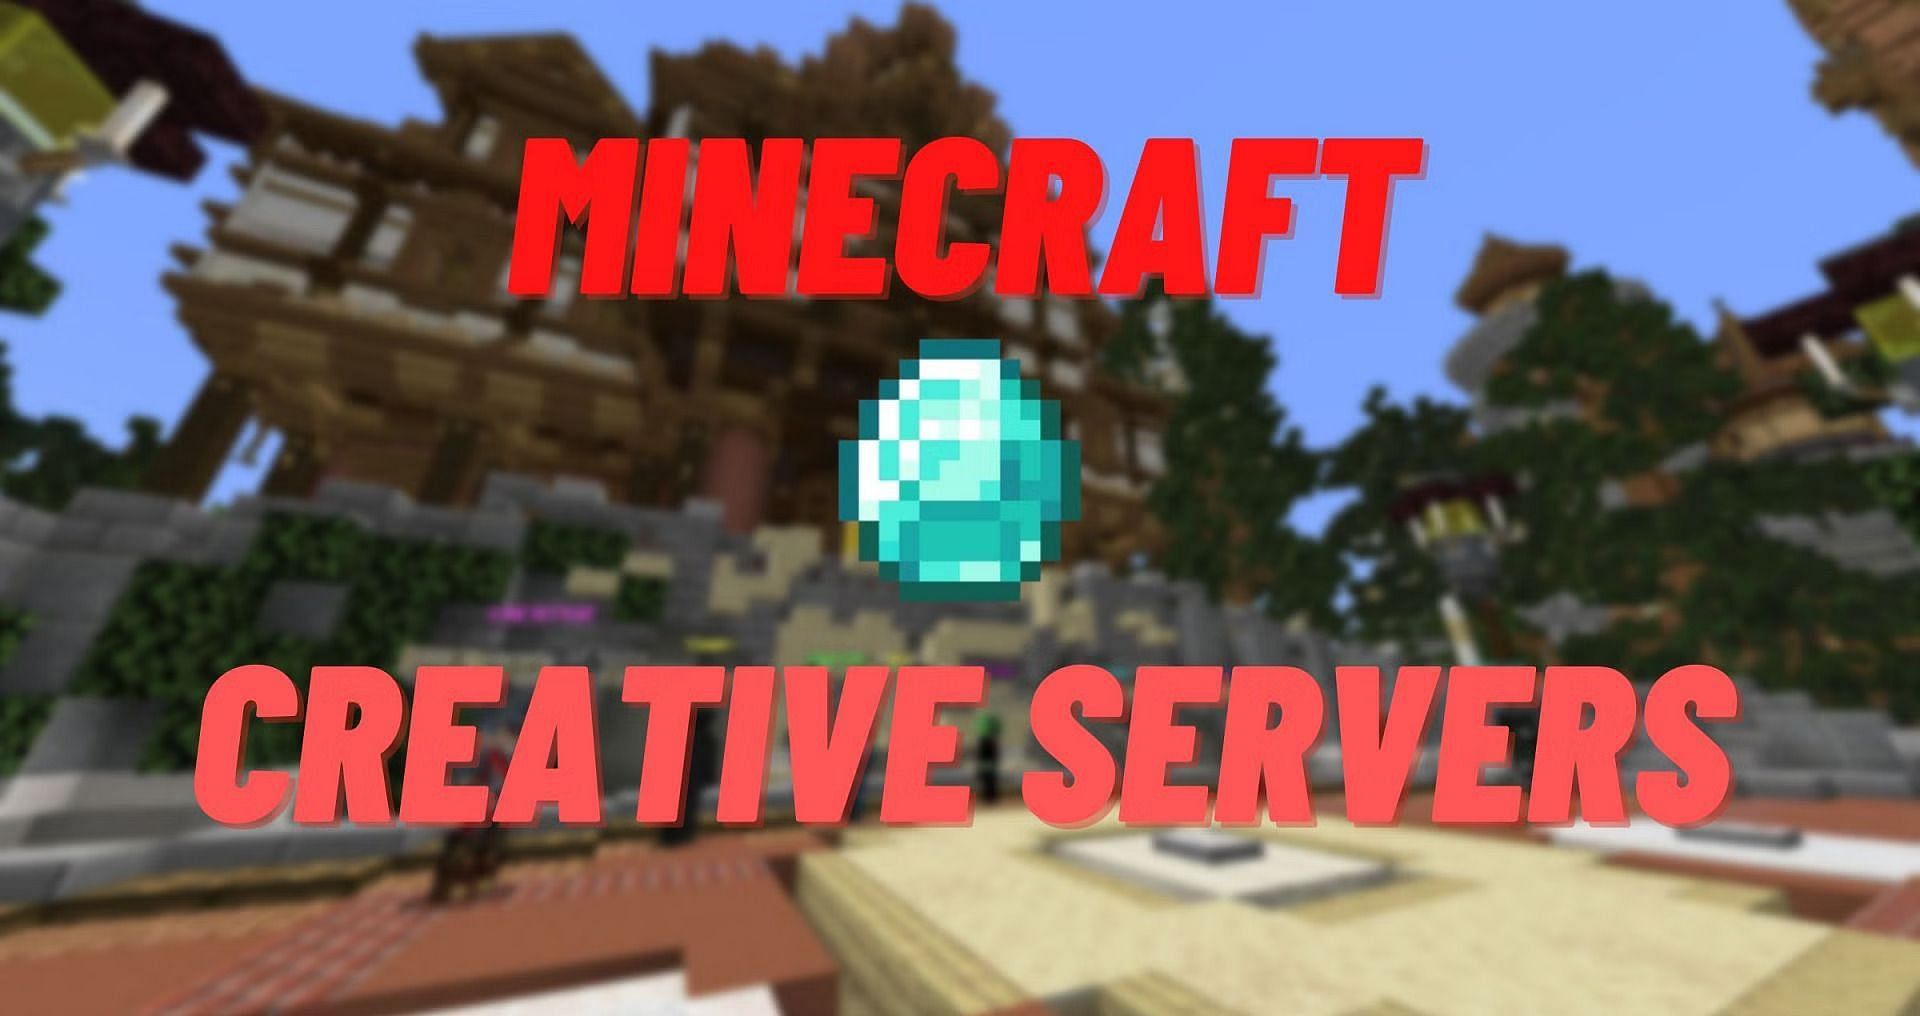 Minecraft Creative servers